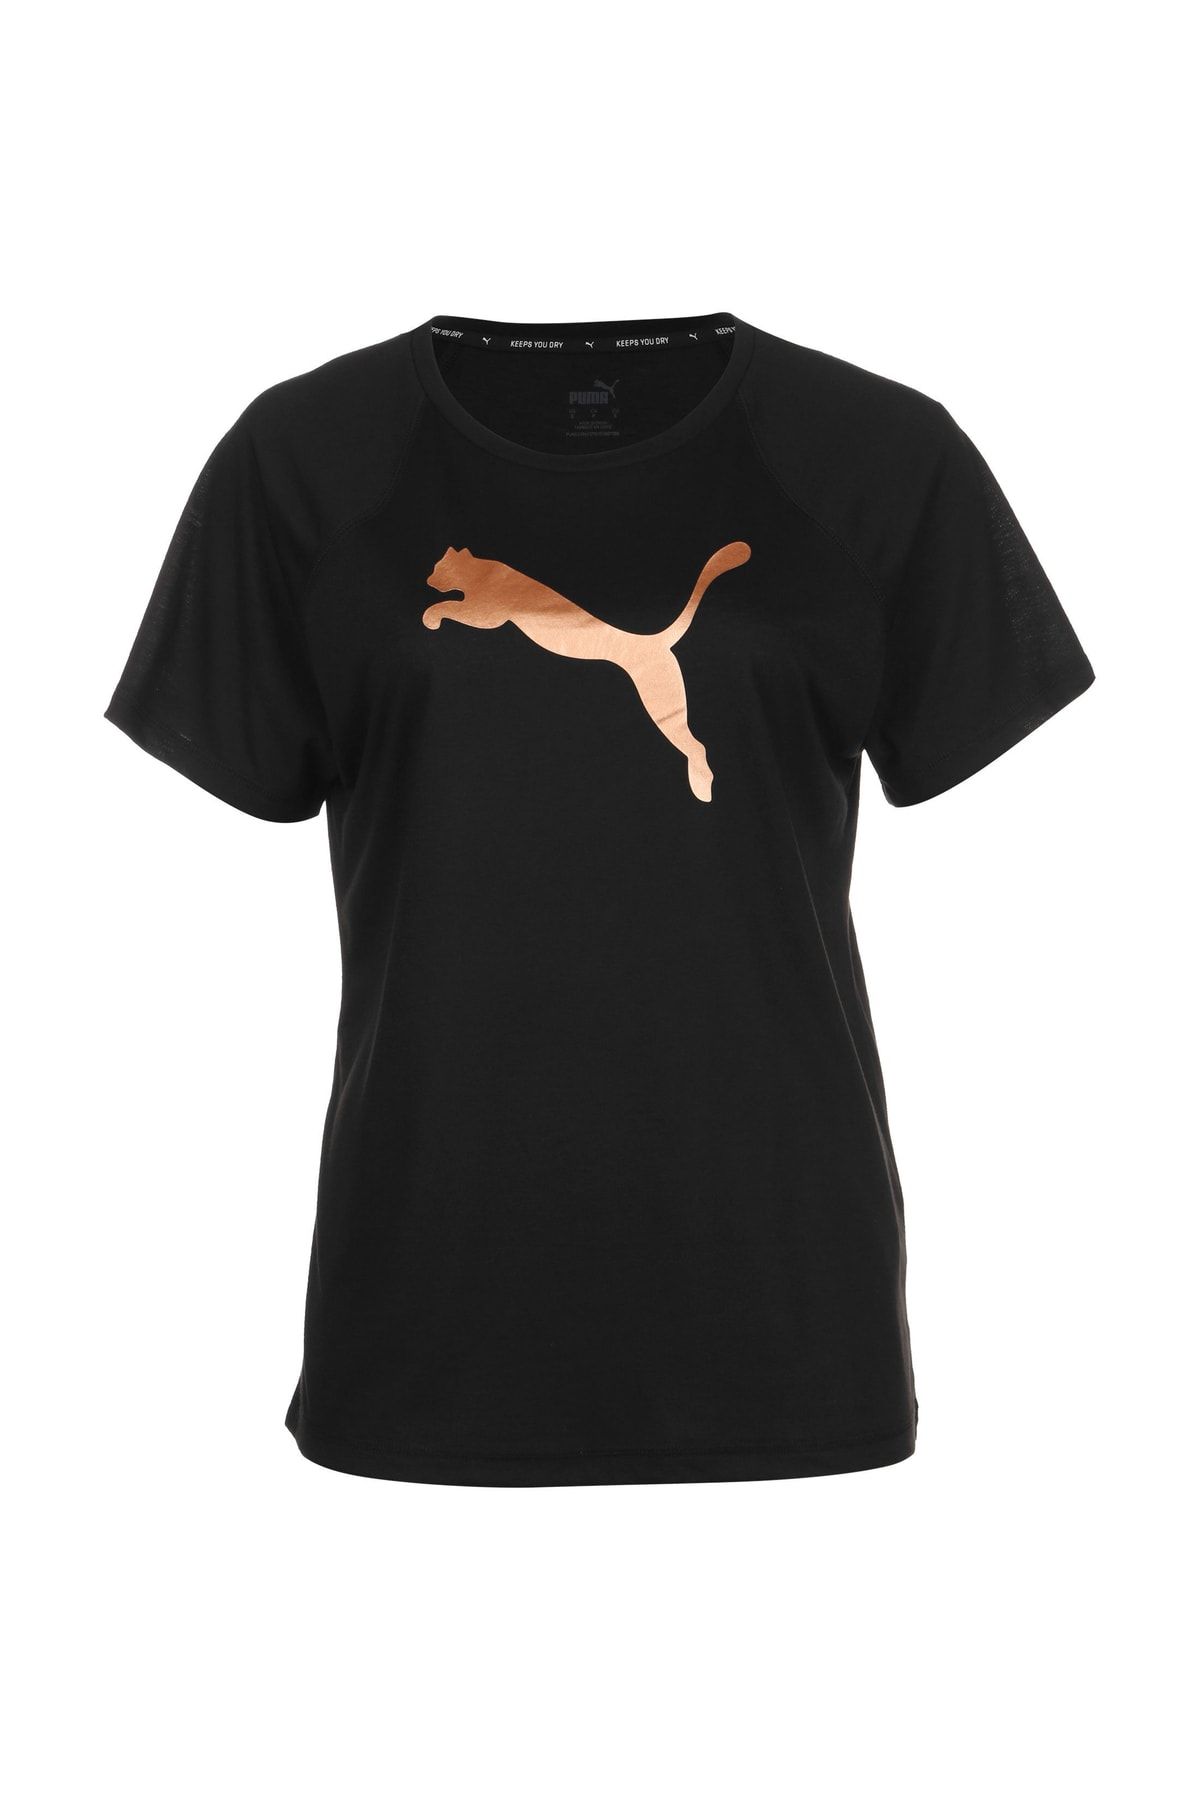 Puma T-Shirt - Black - Trendyol - fit Regular